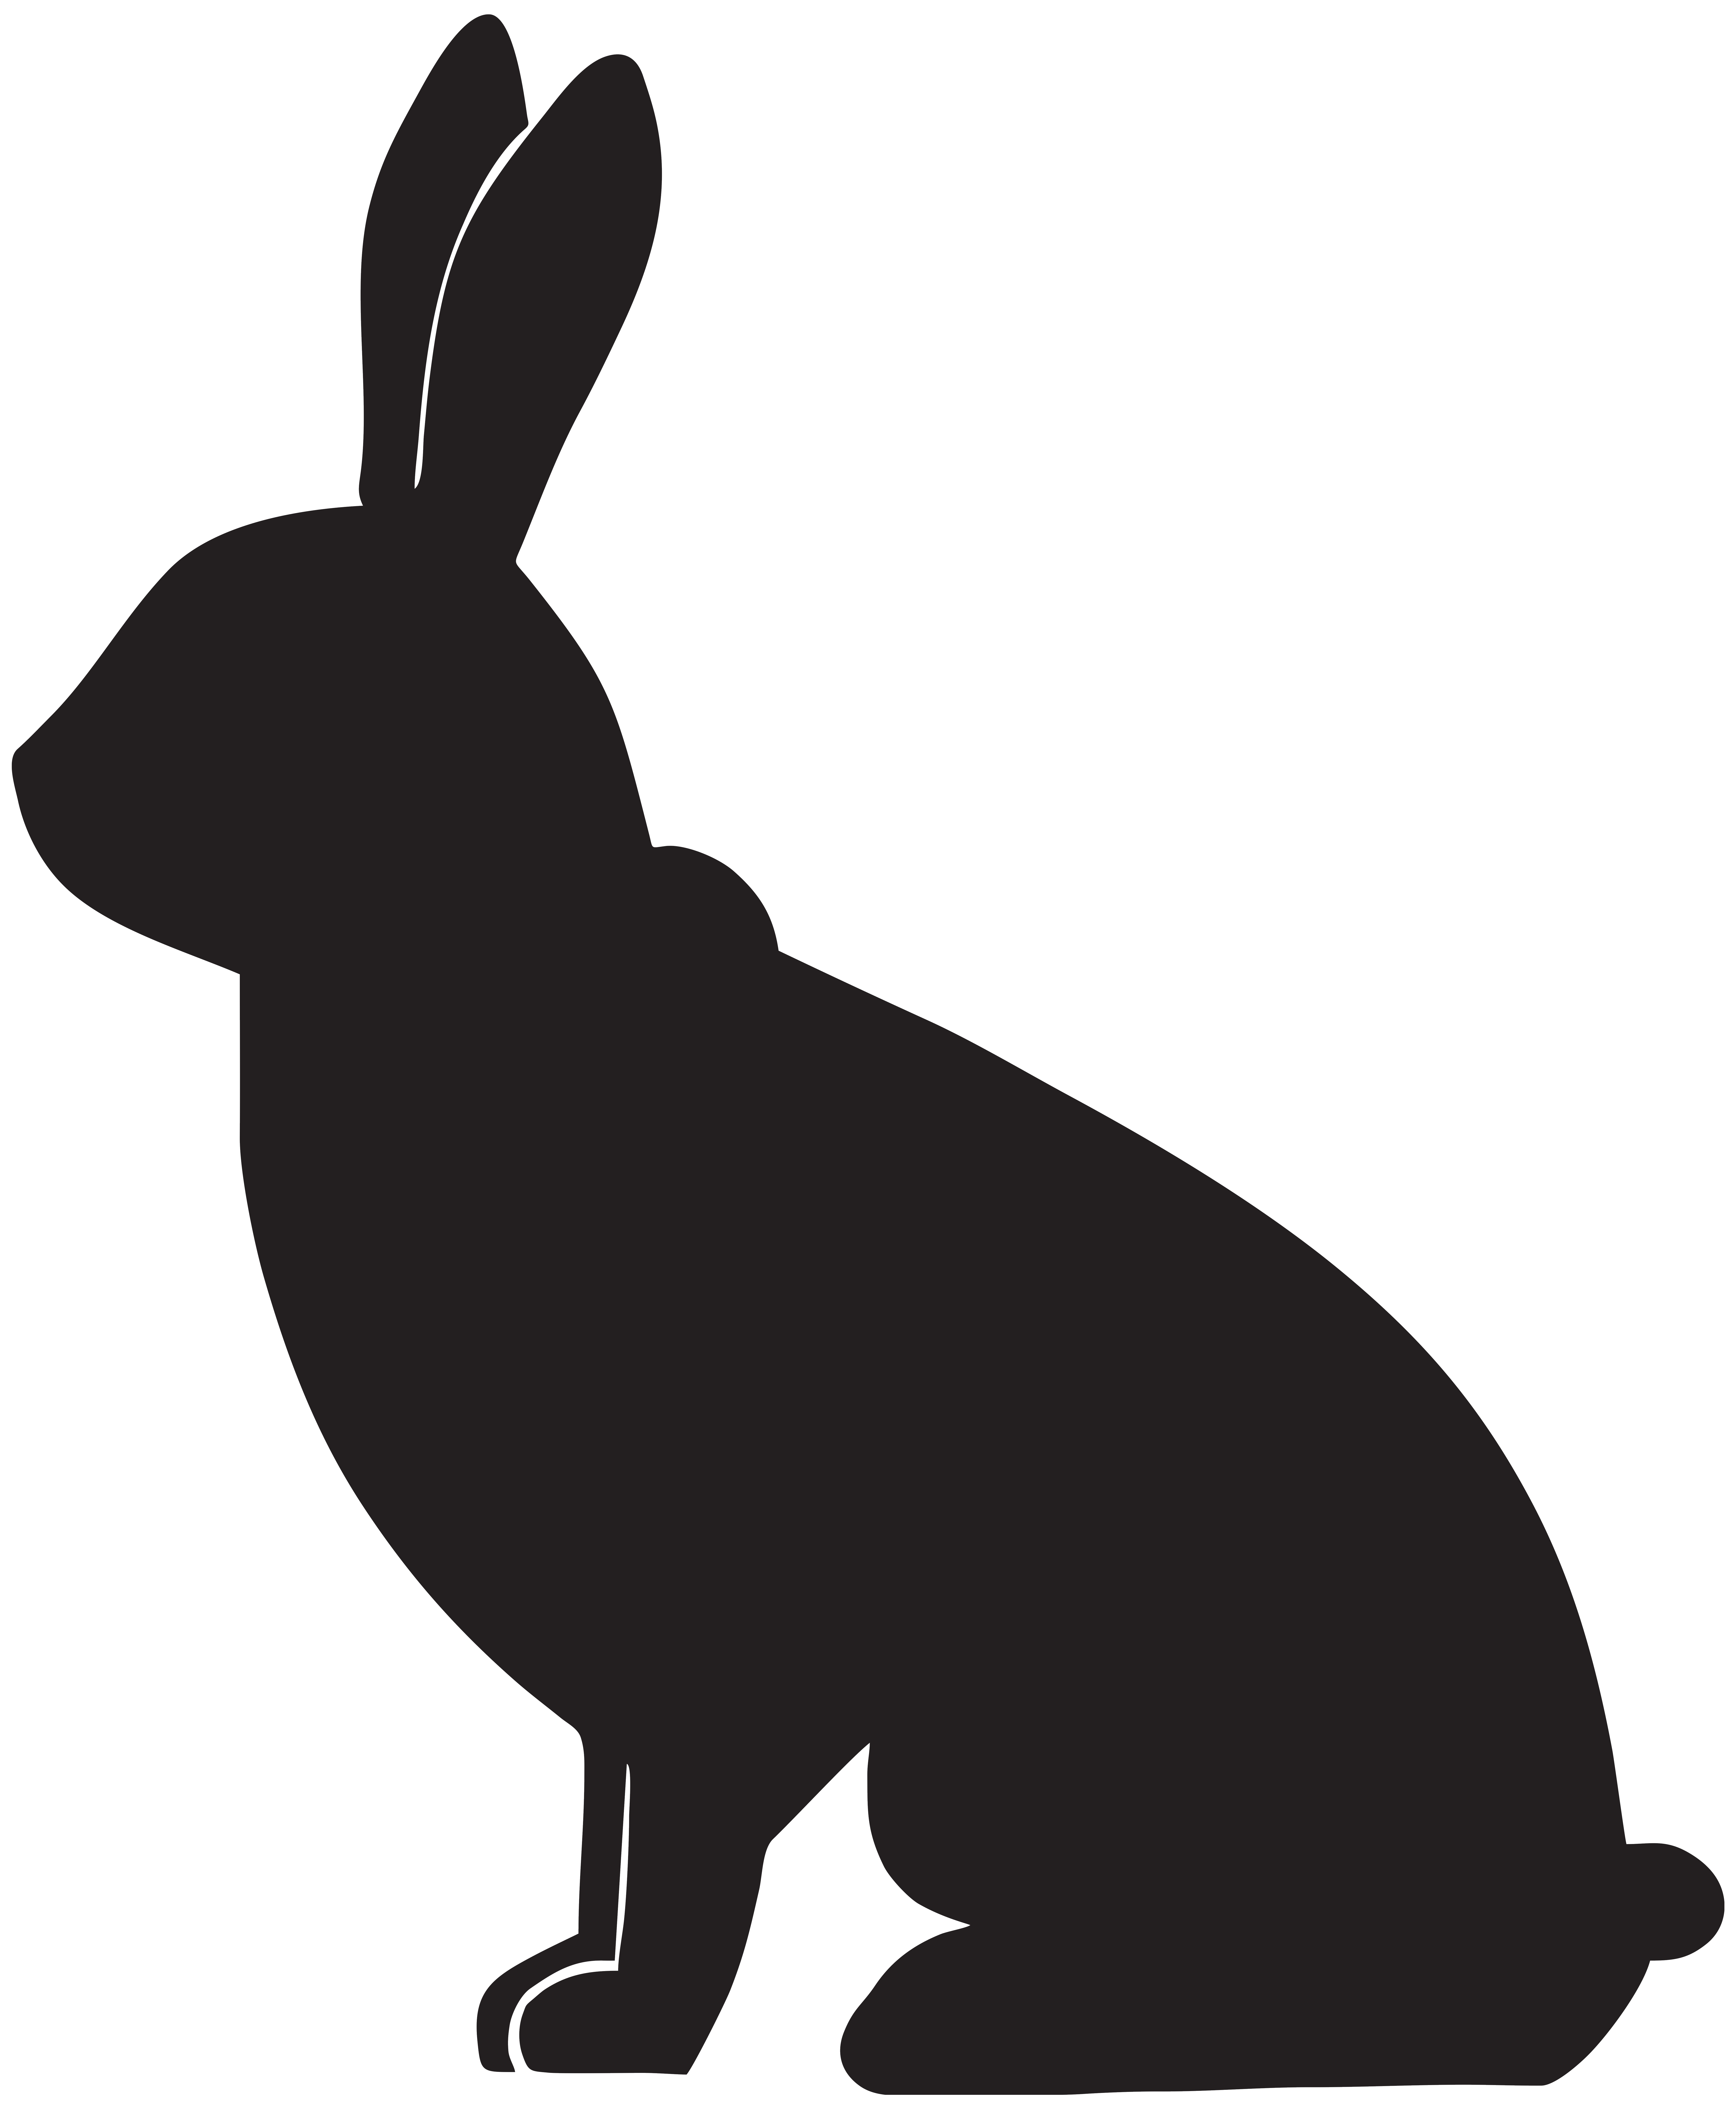 Clipart squirrel rabbit. Silhouette clip art at